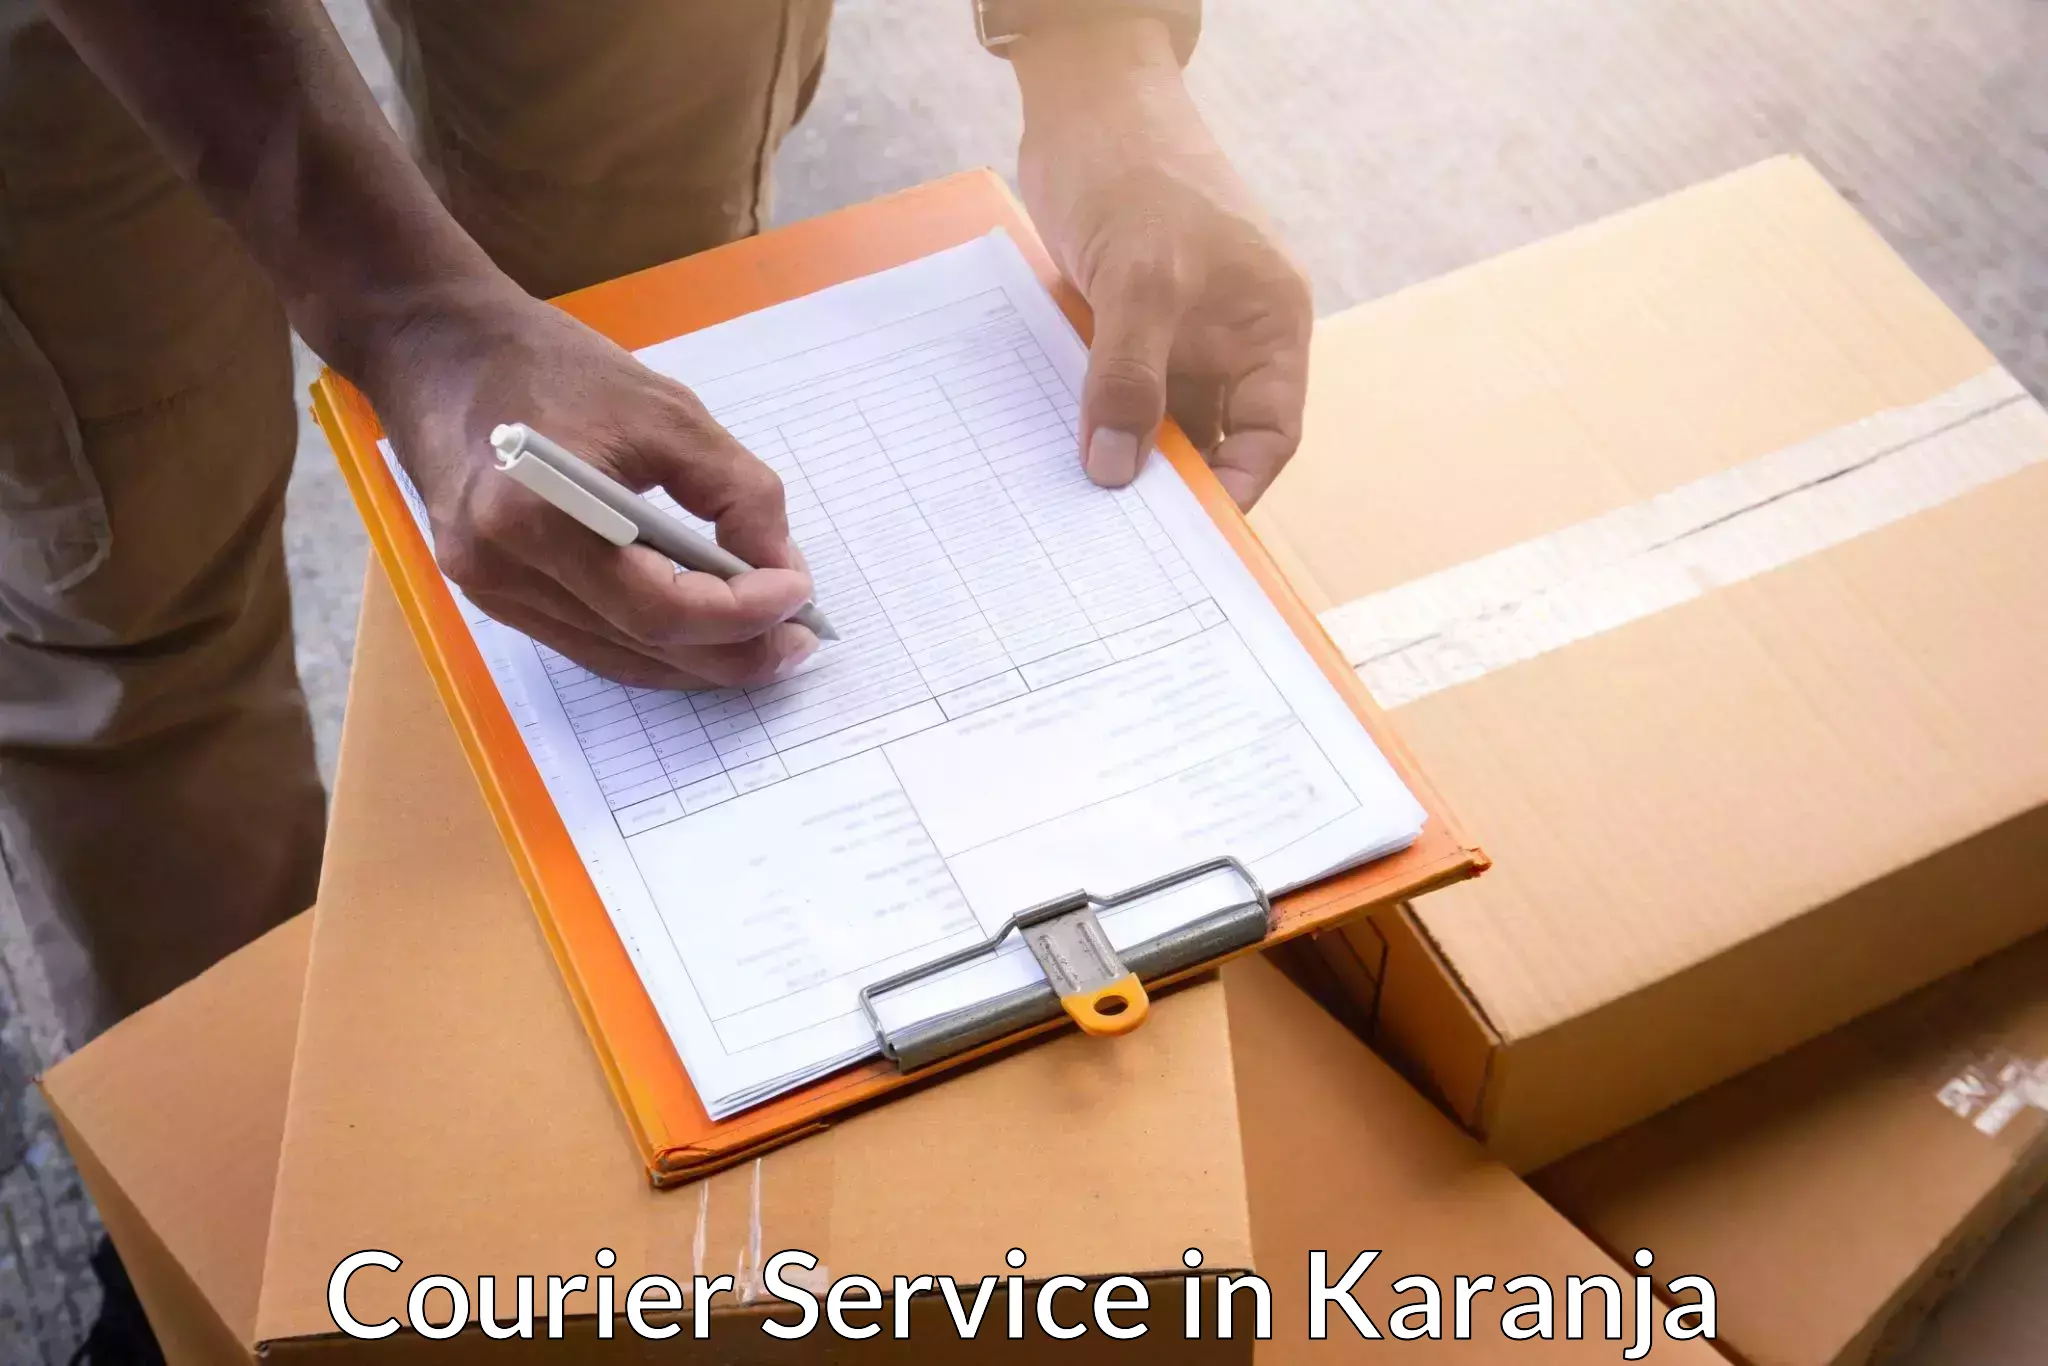 On-demand delivery in Karanja